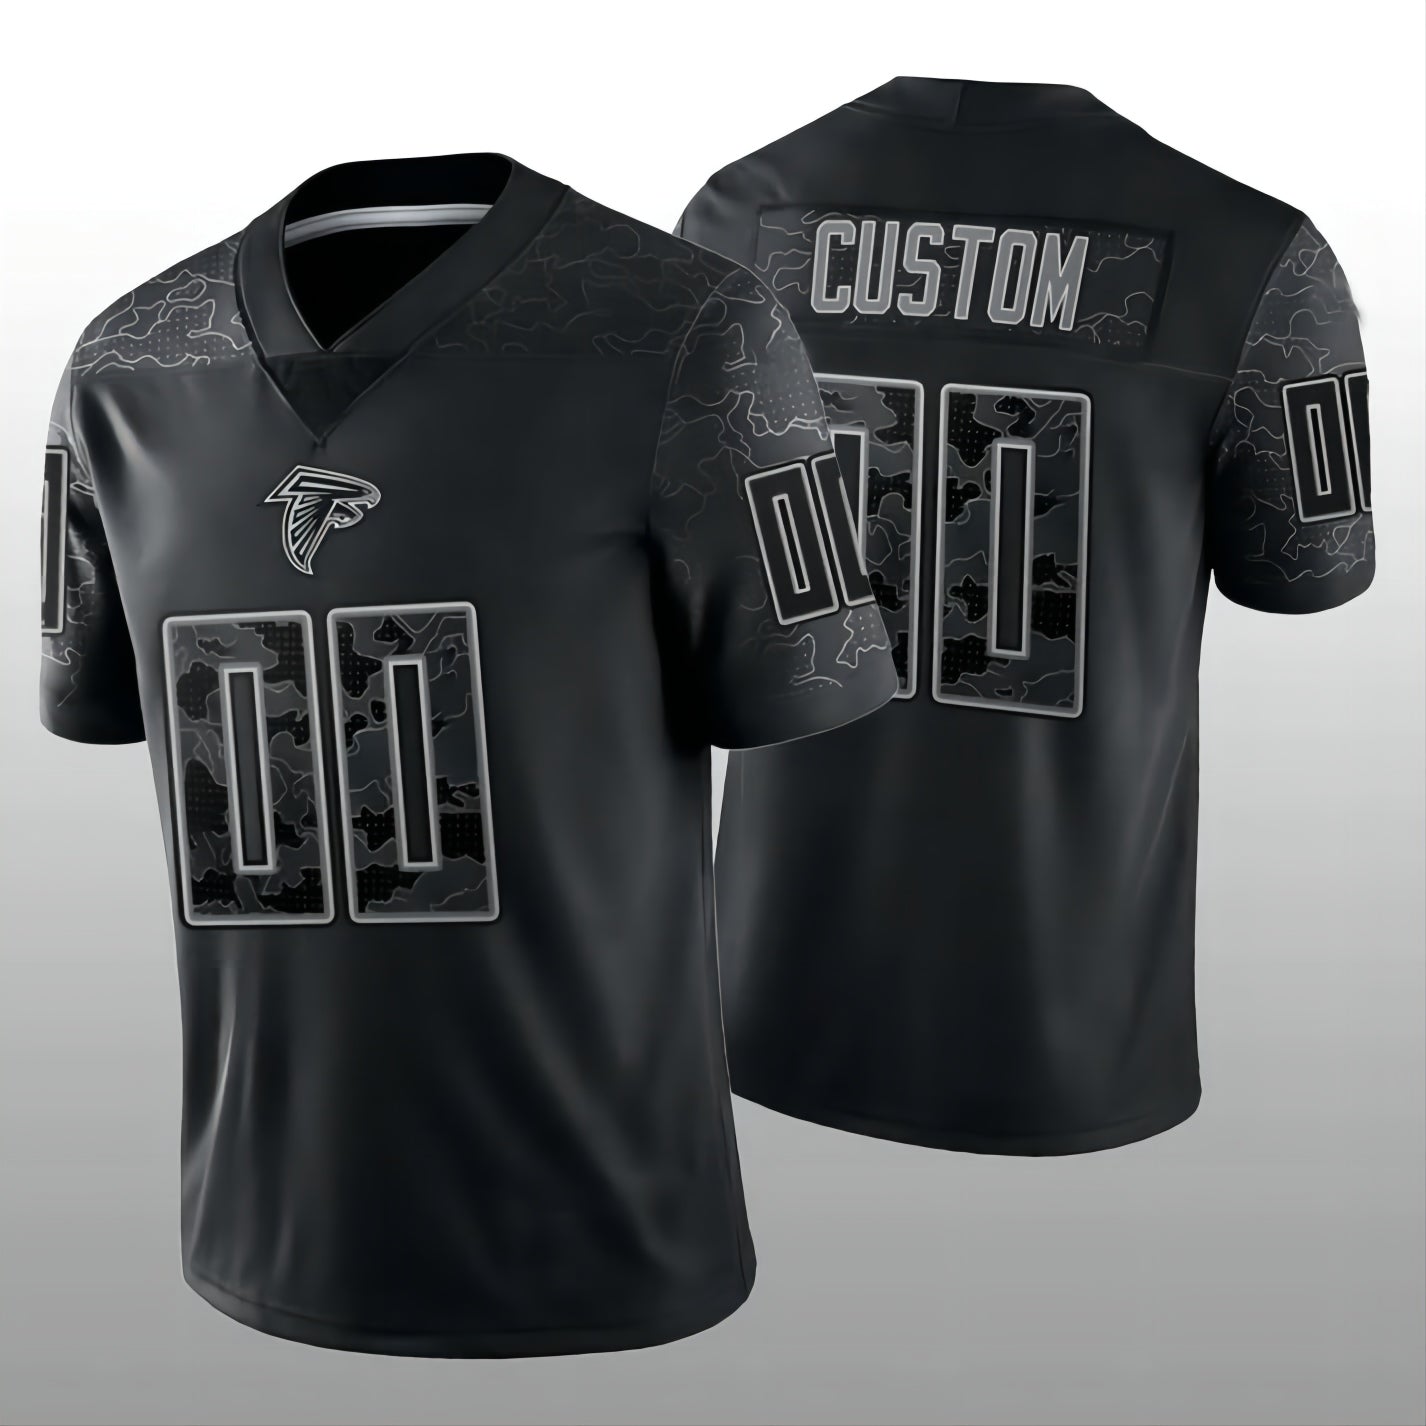 Custom A.Falcons Football Jerseys Stitched Black RFLCTV Limited Jersey American Jerseys